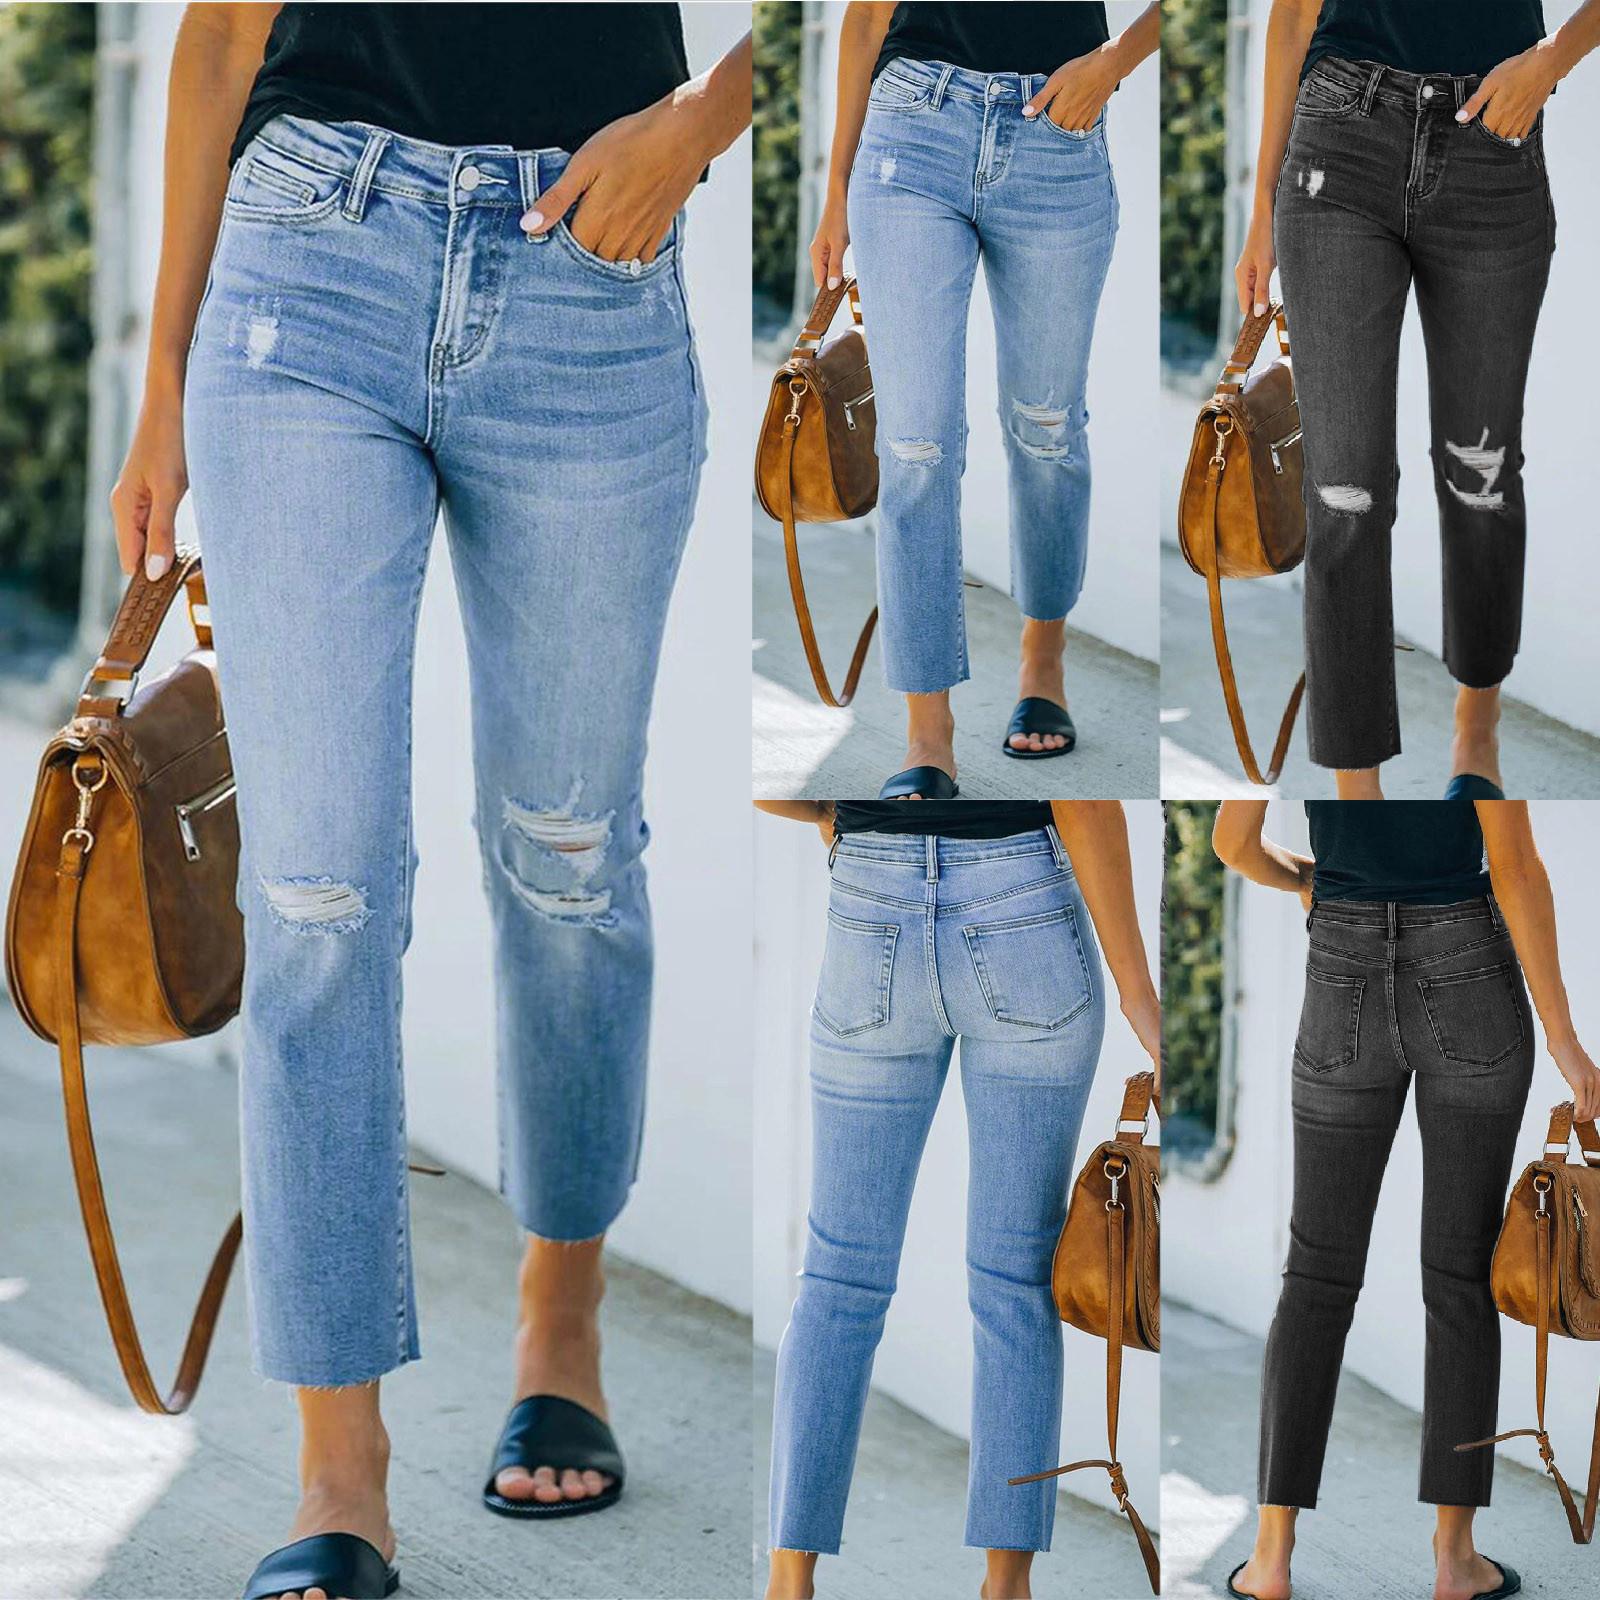 Haide Mode Dames Zakken Knoop Mid Taille Skinny Ripped Jeans Broek Gatbroek